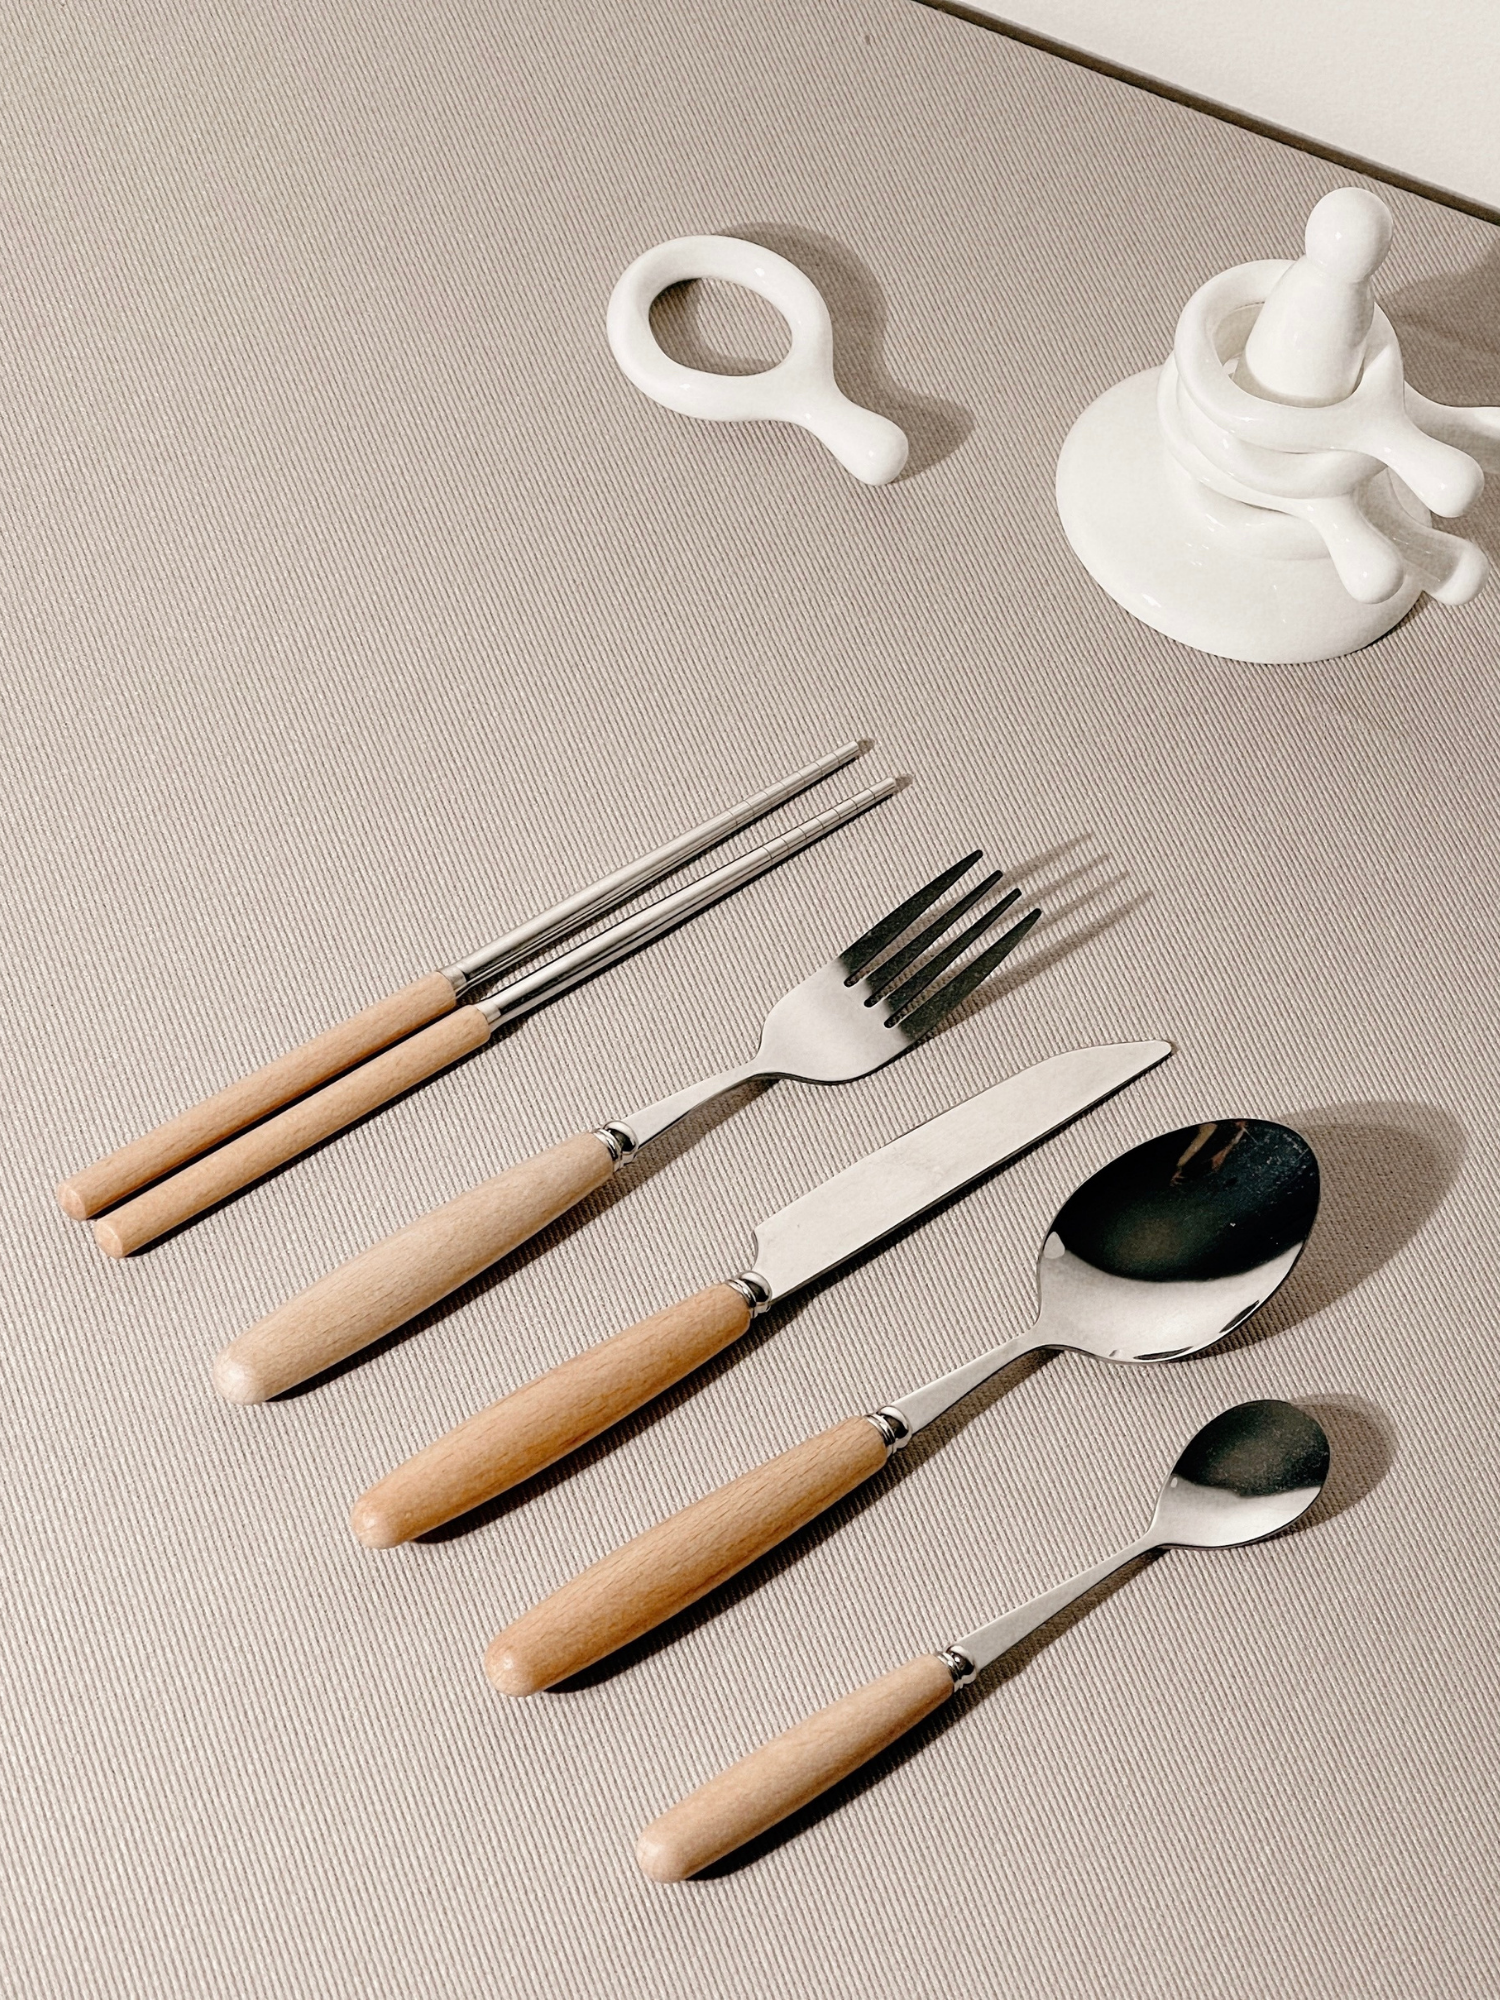 SAMPLE - CHO Cutlery Set 002